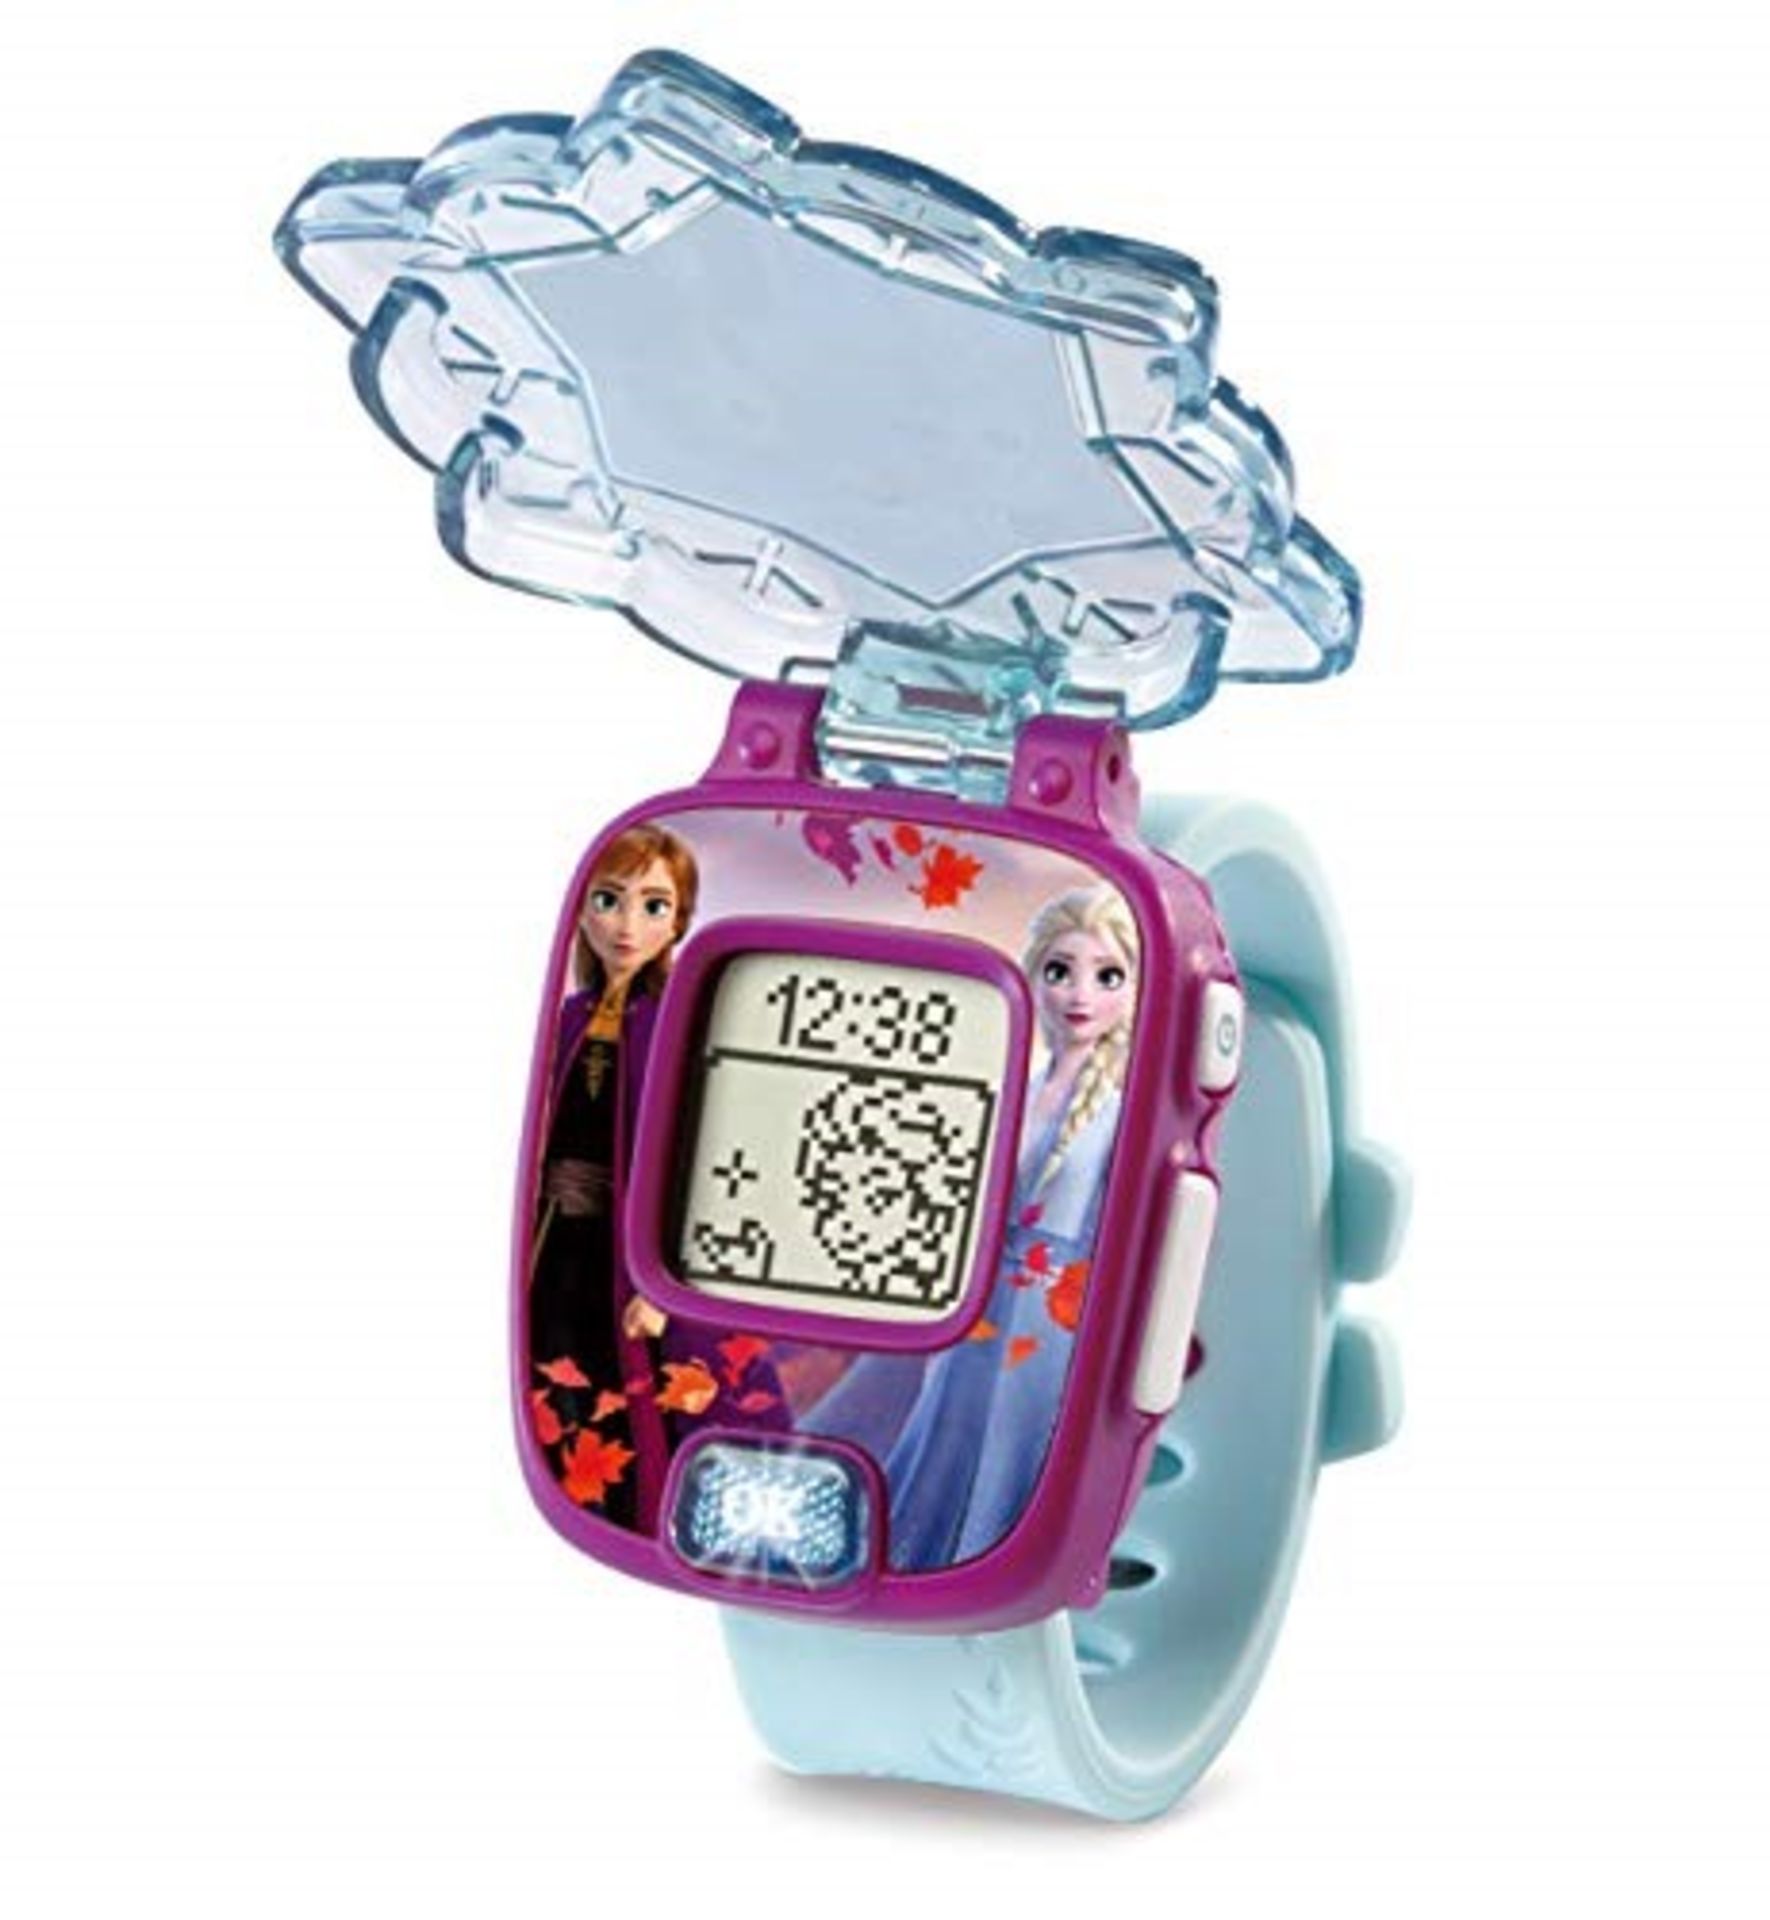 VTech Frozen 2 Digital Watch (Anna and Elsa). 3480-518822 - Spanish version